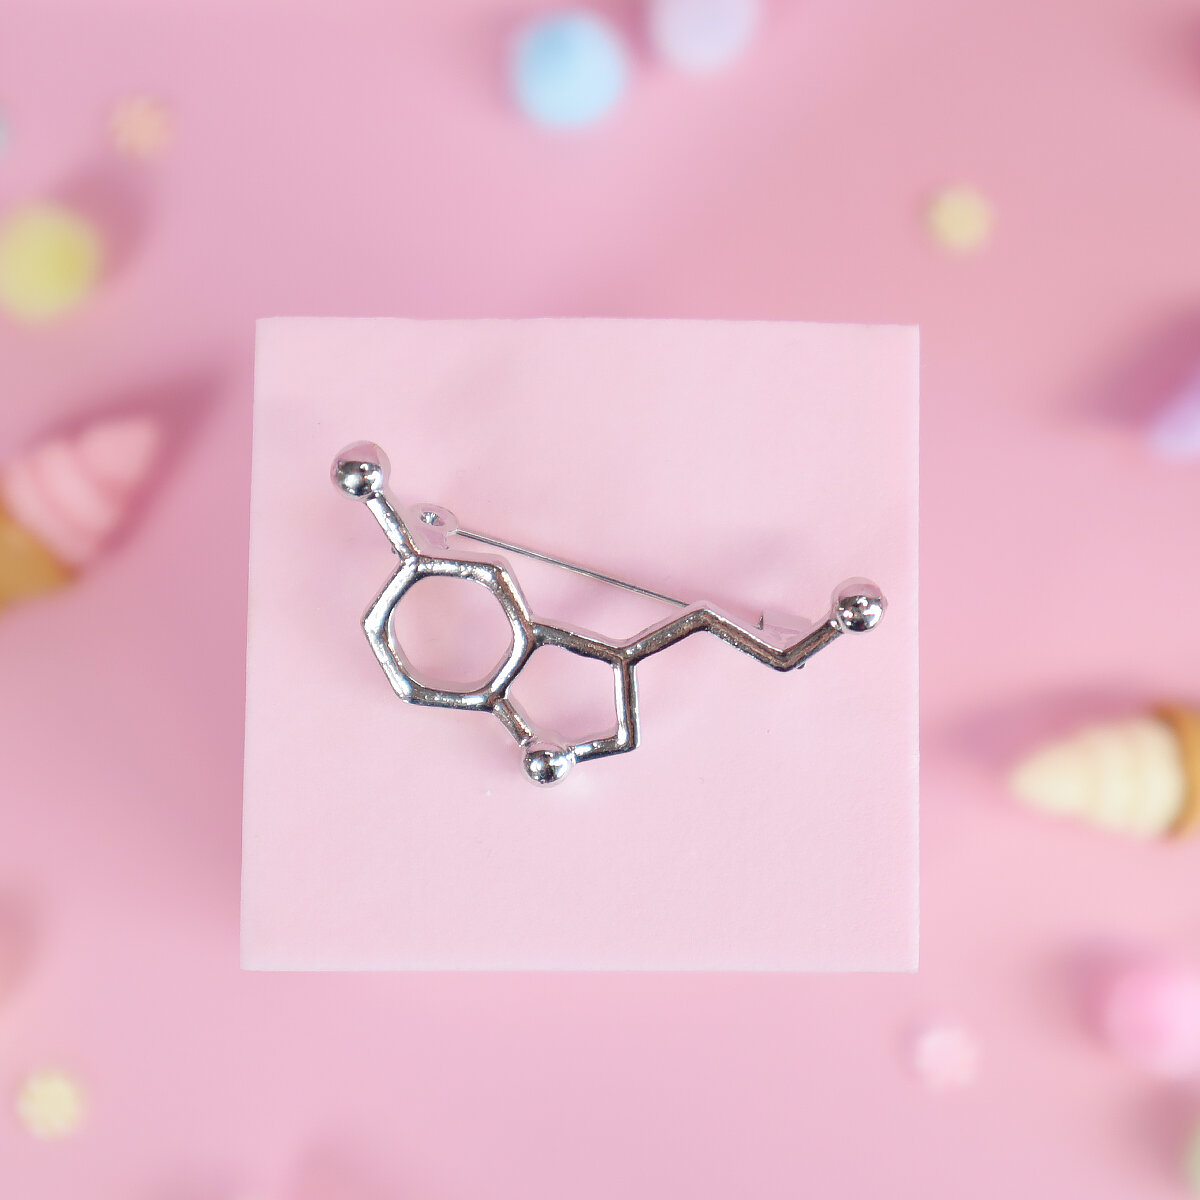 Pin - Serotonin, kemisk beteckning